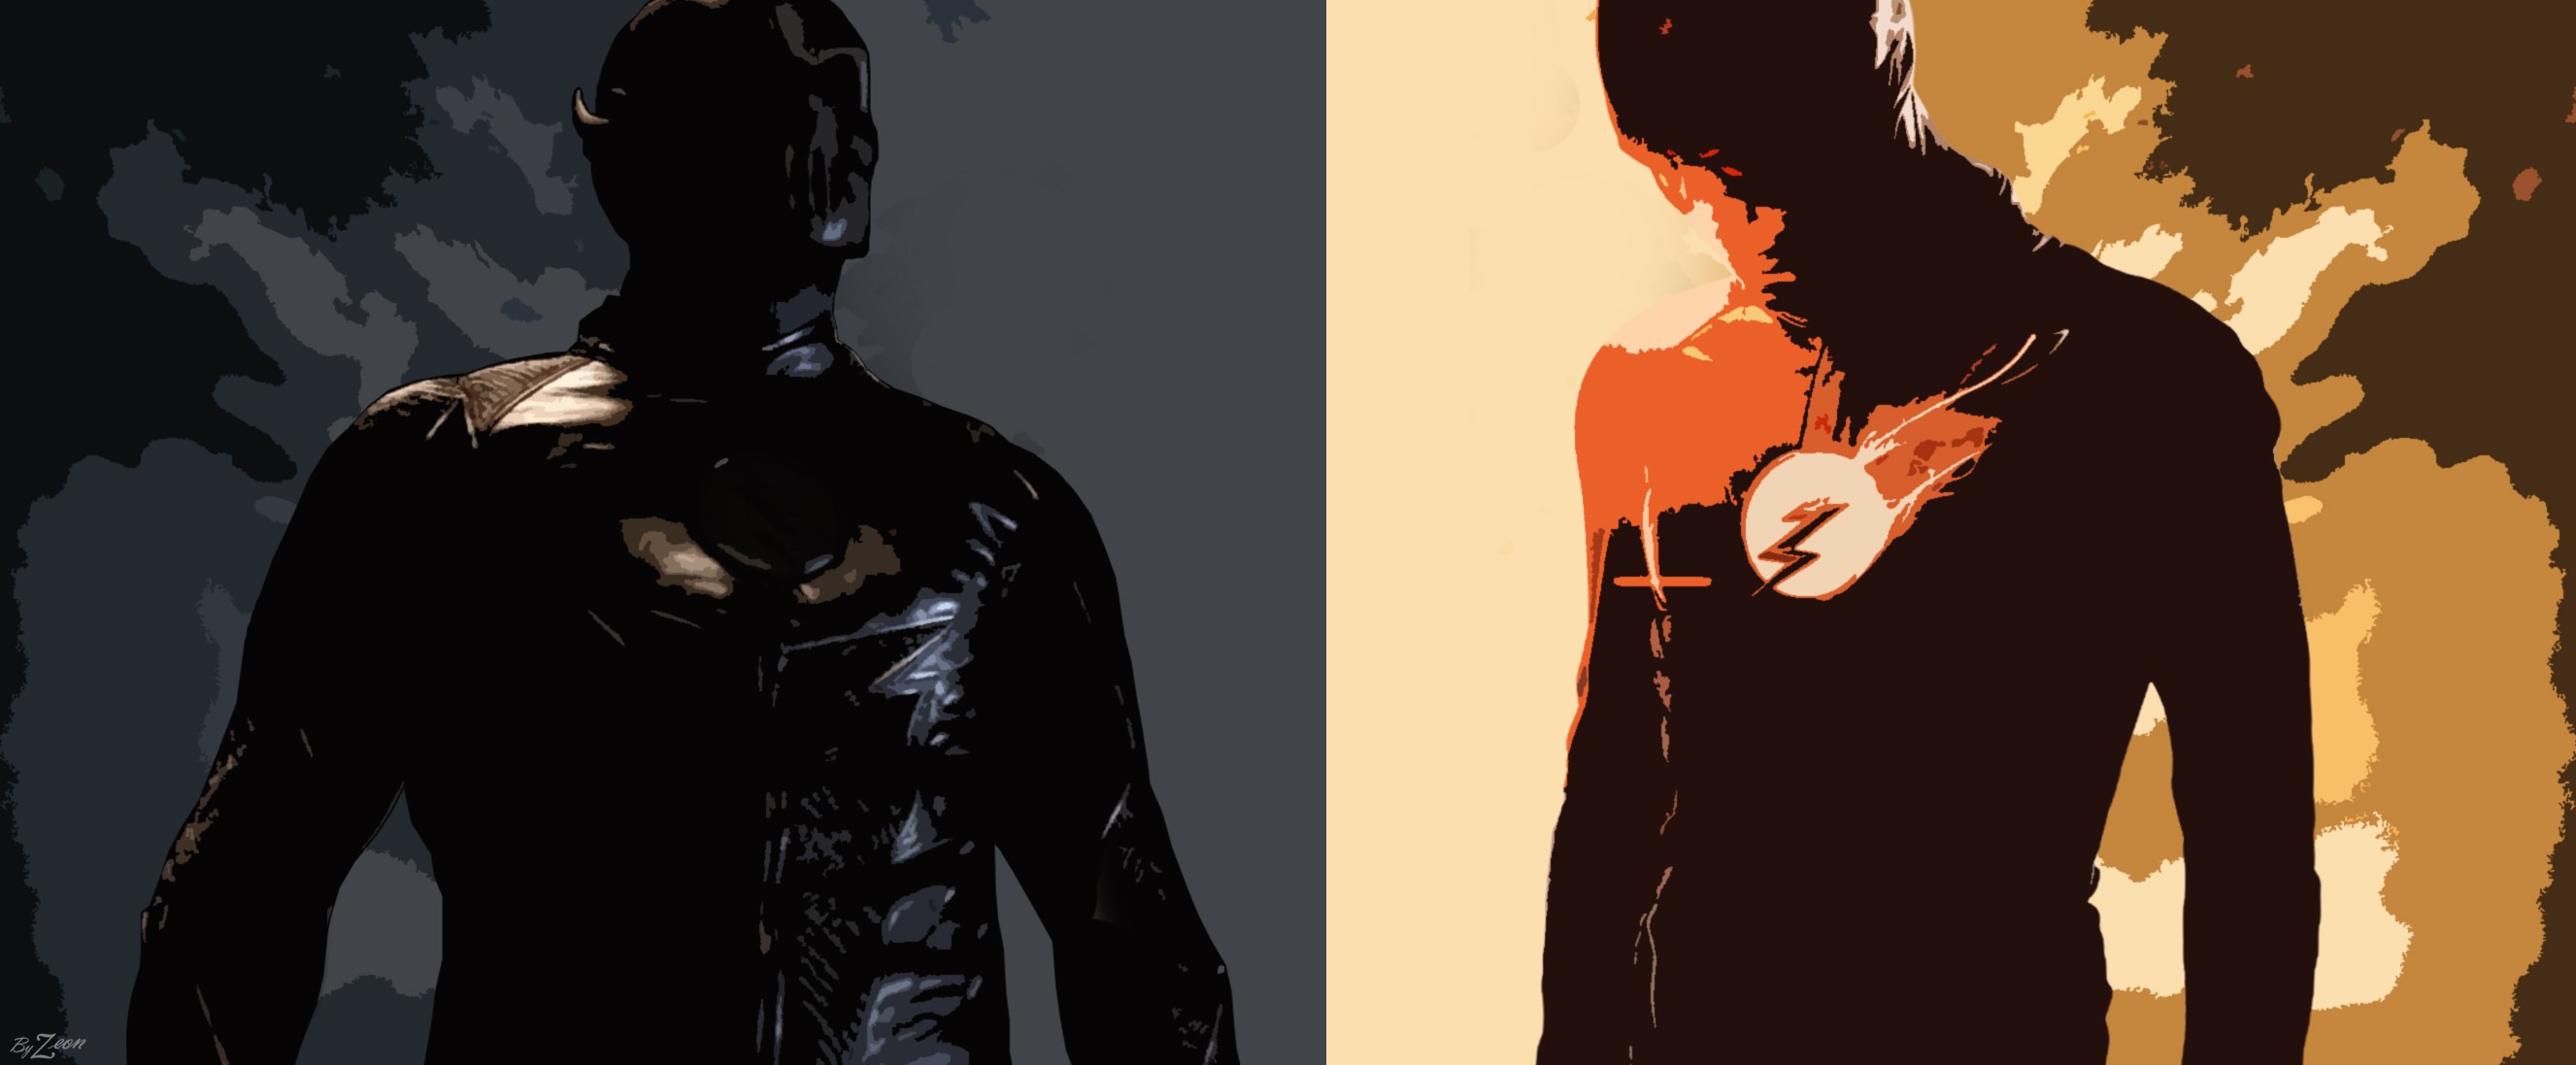 Wallpaper, illustration, silhouette, superhero, DC Comics, The Flash, screenshot 2653x1097